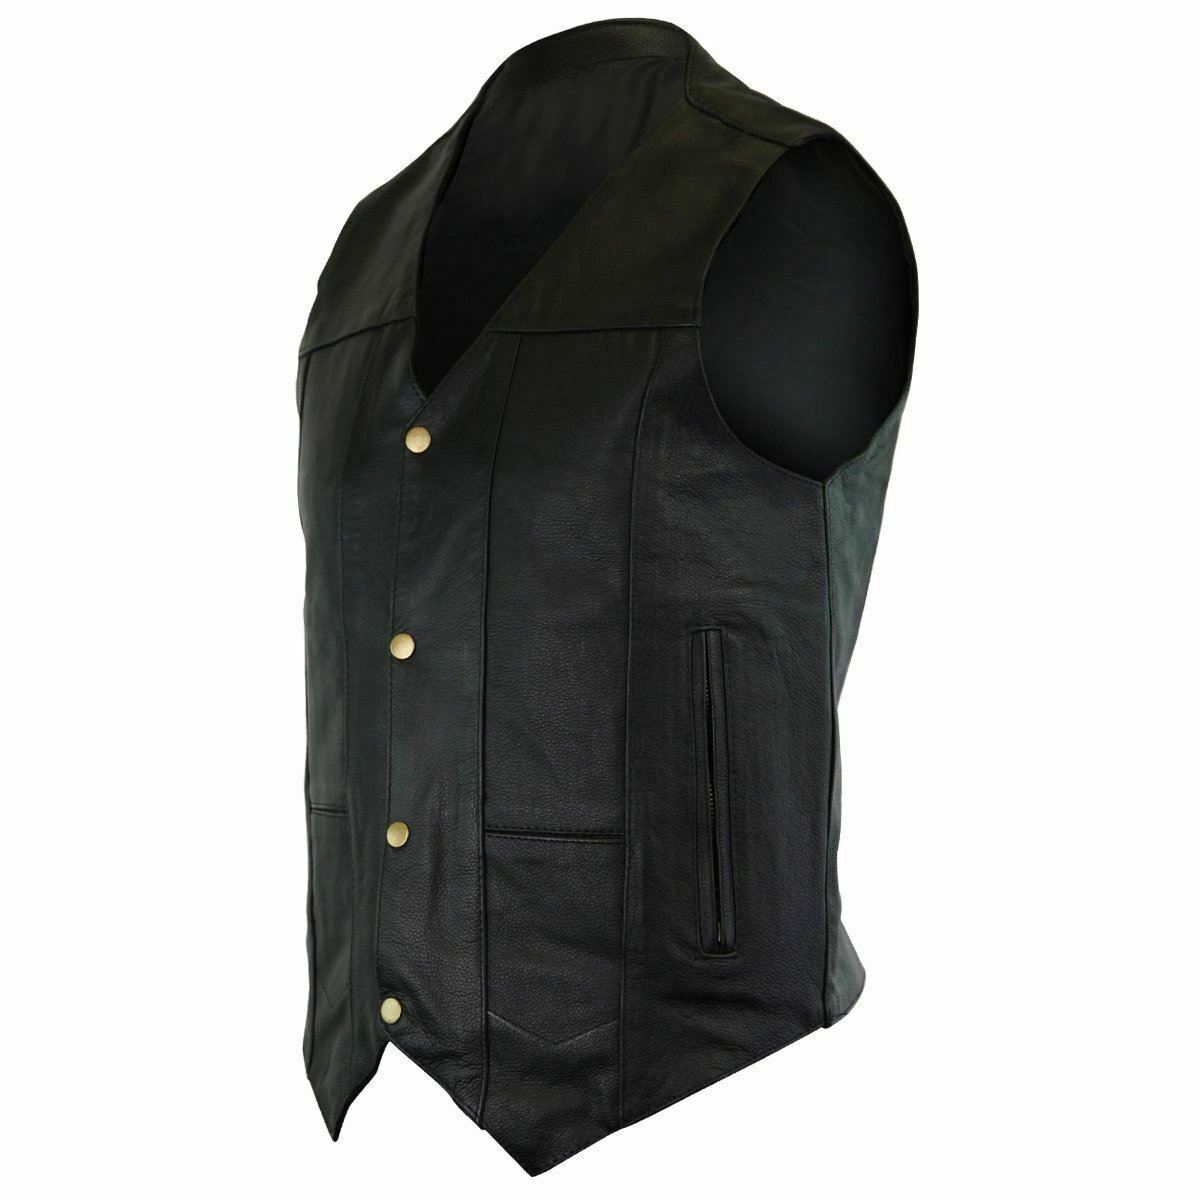 Vance Leather VL917 Concealment Leather Motorcycle Vest